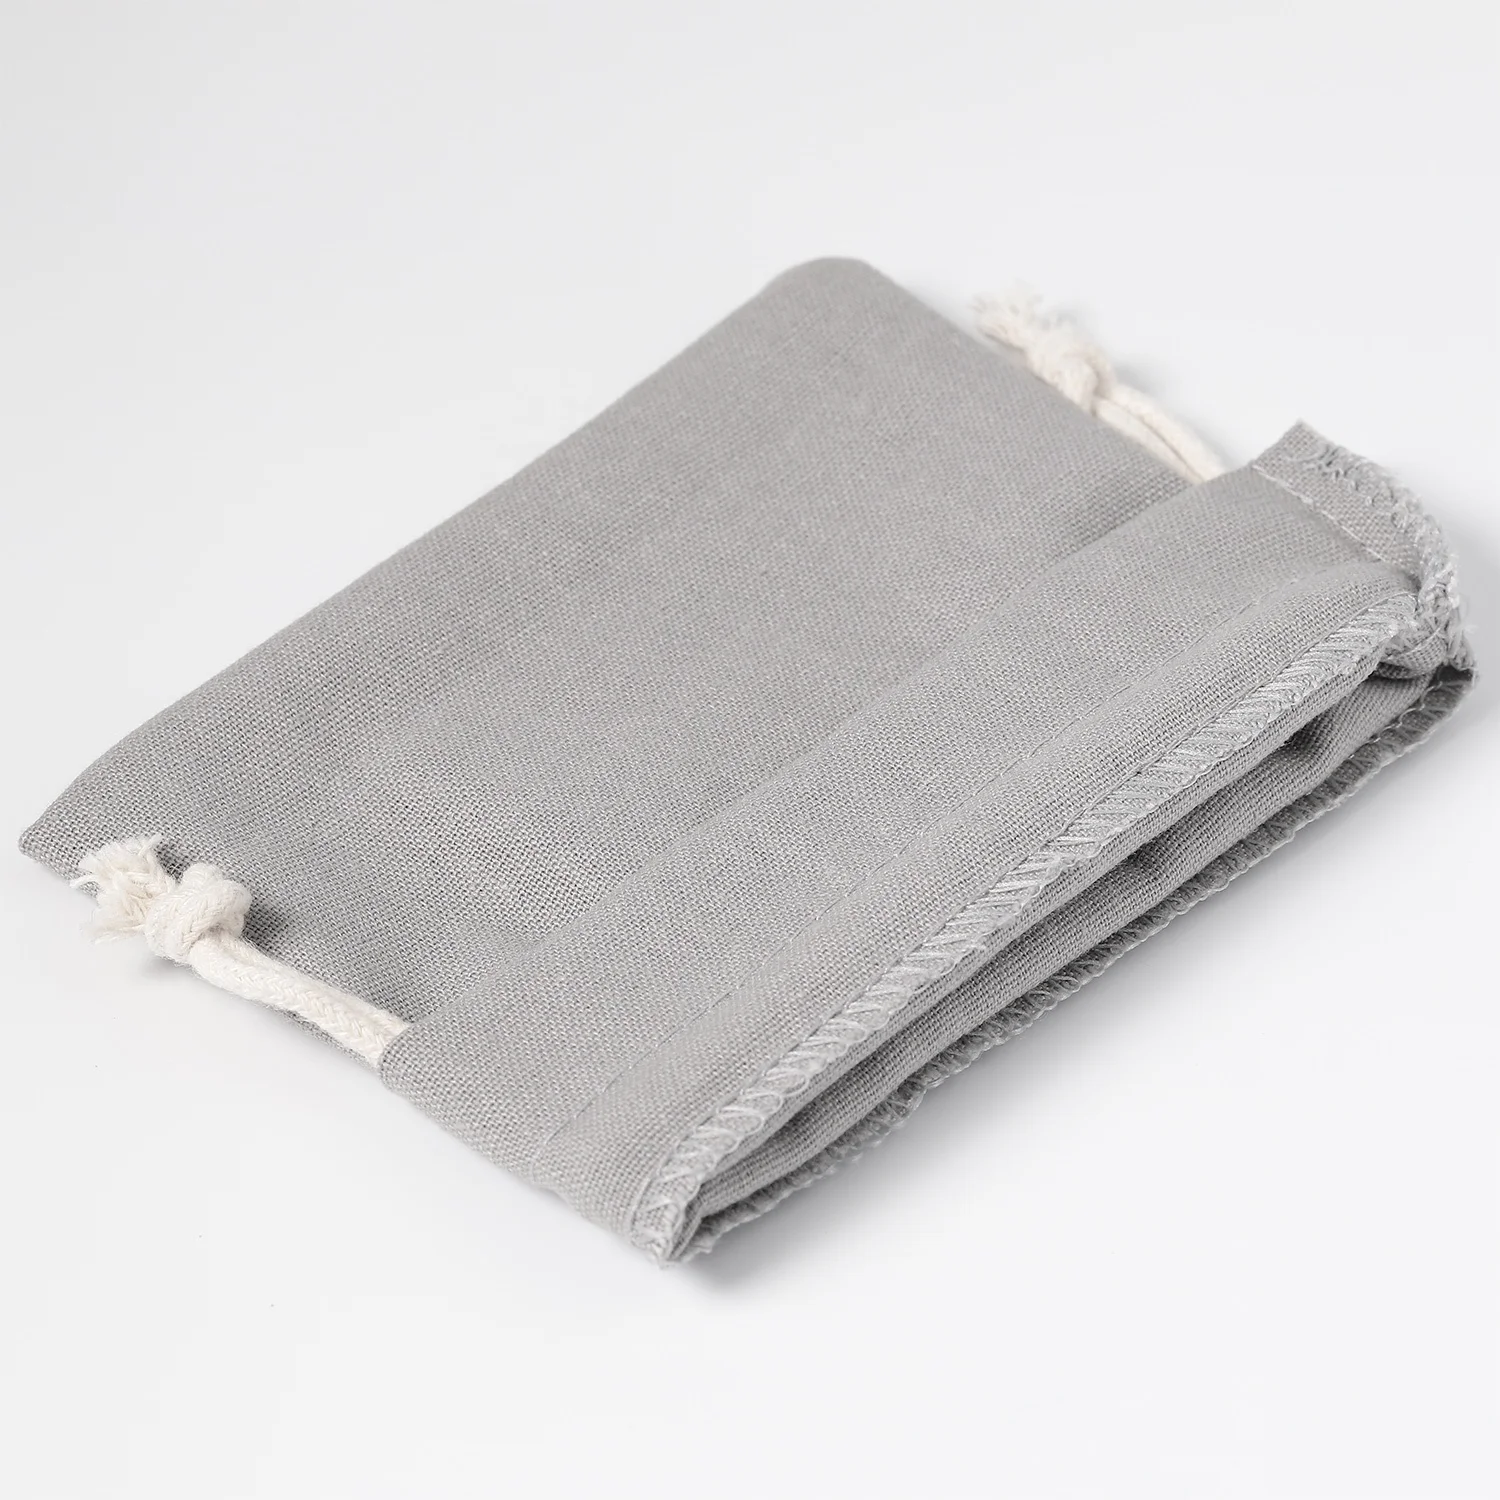 Wholesale custom logo silk clothes dustbag for handbags small natural cotton drawstring shoe dust bag